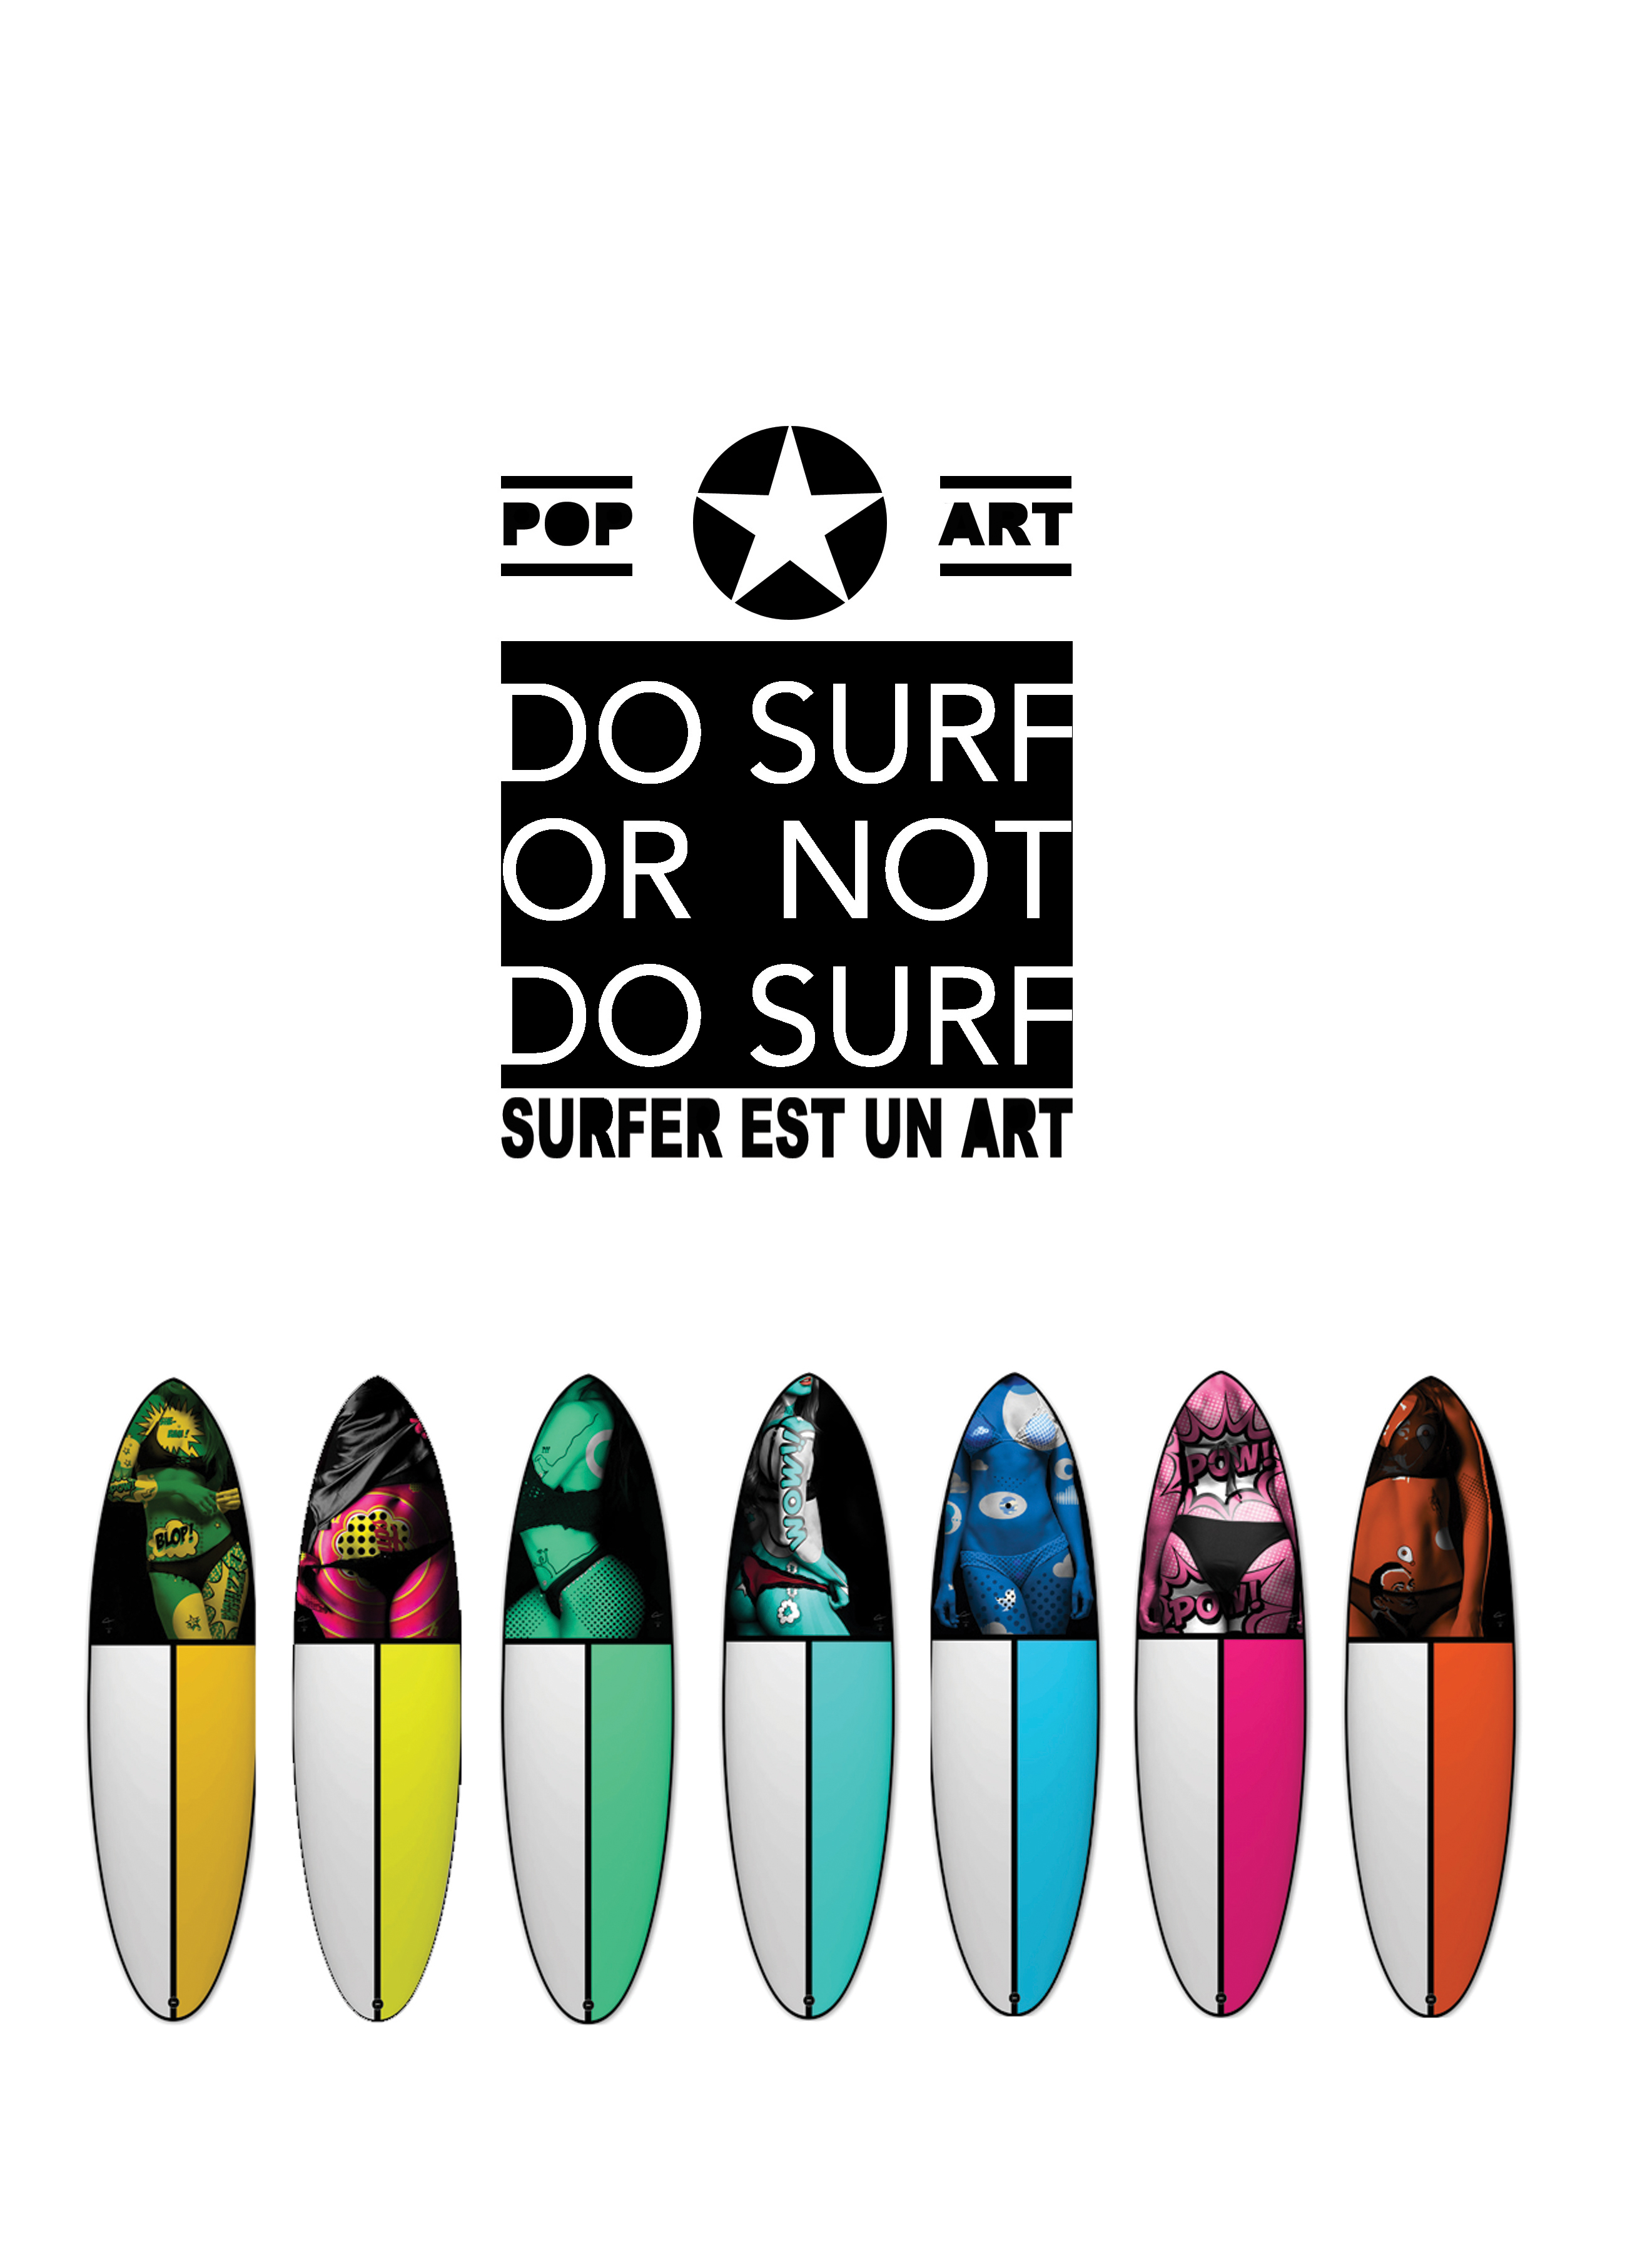 DO SURF OR NOT DO SURF